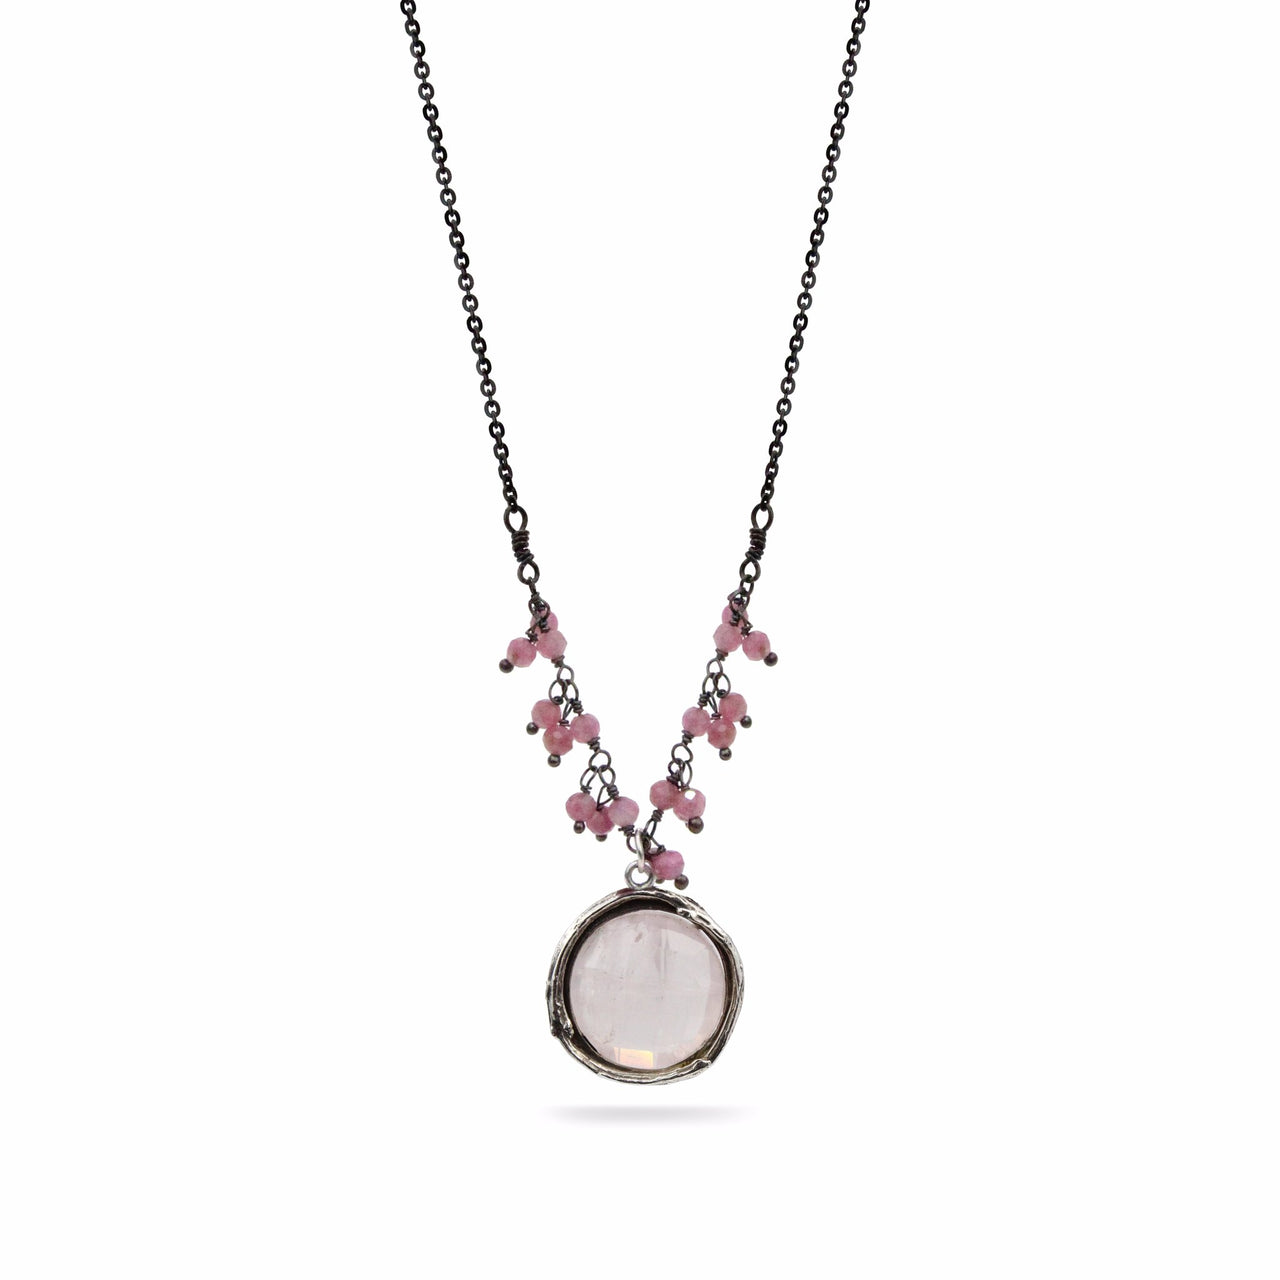 Susan Rodgers Designs: Charisma necklace